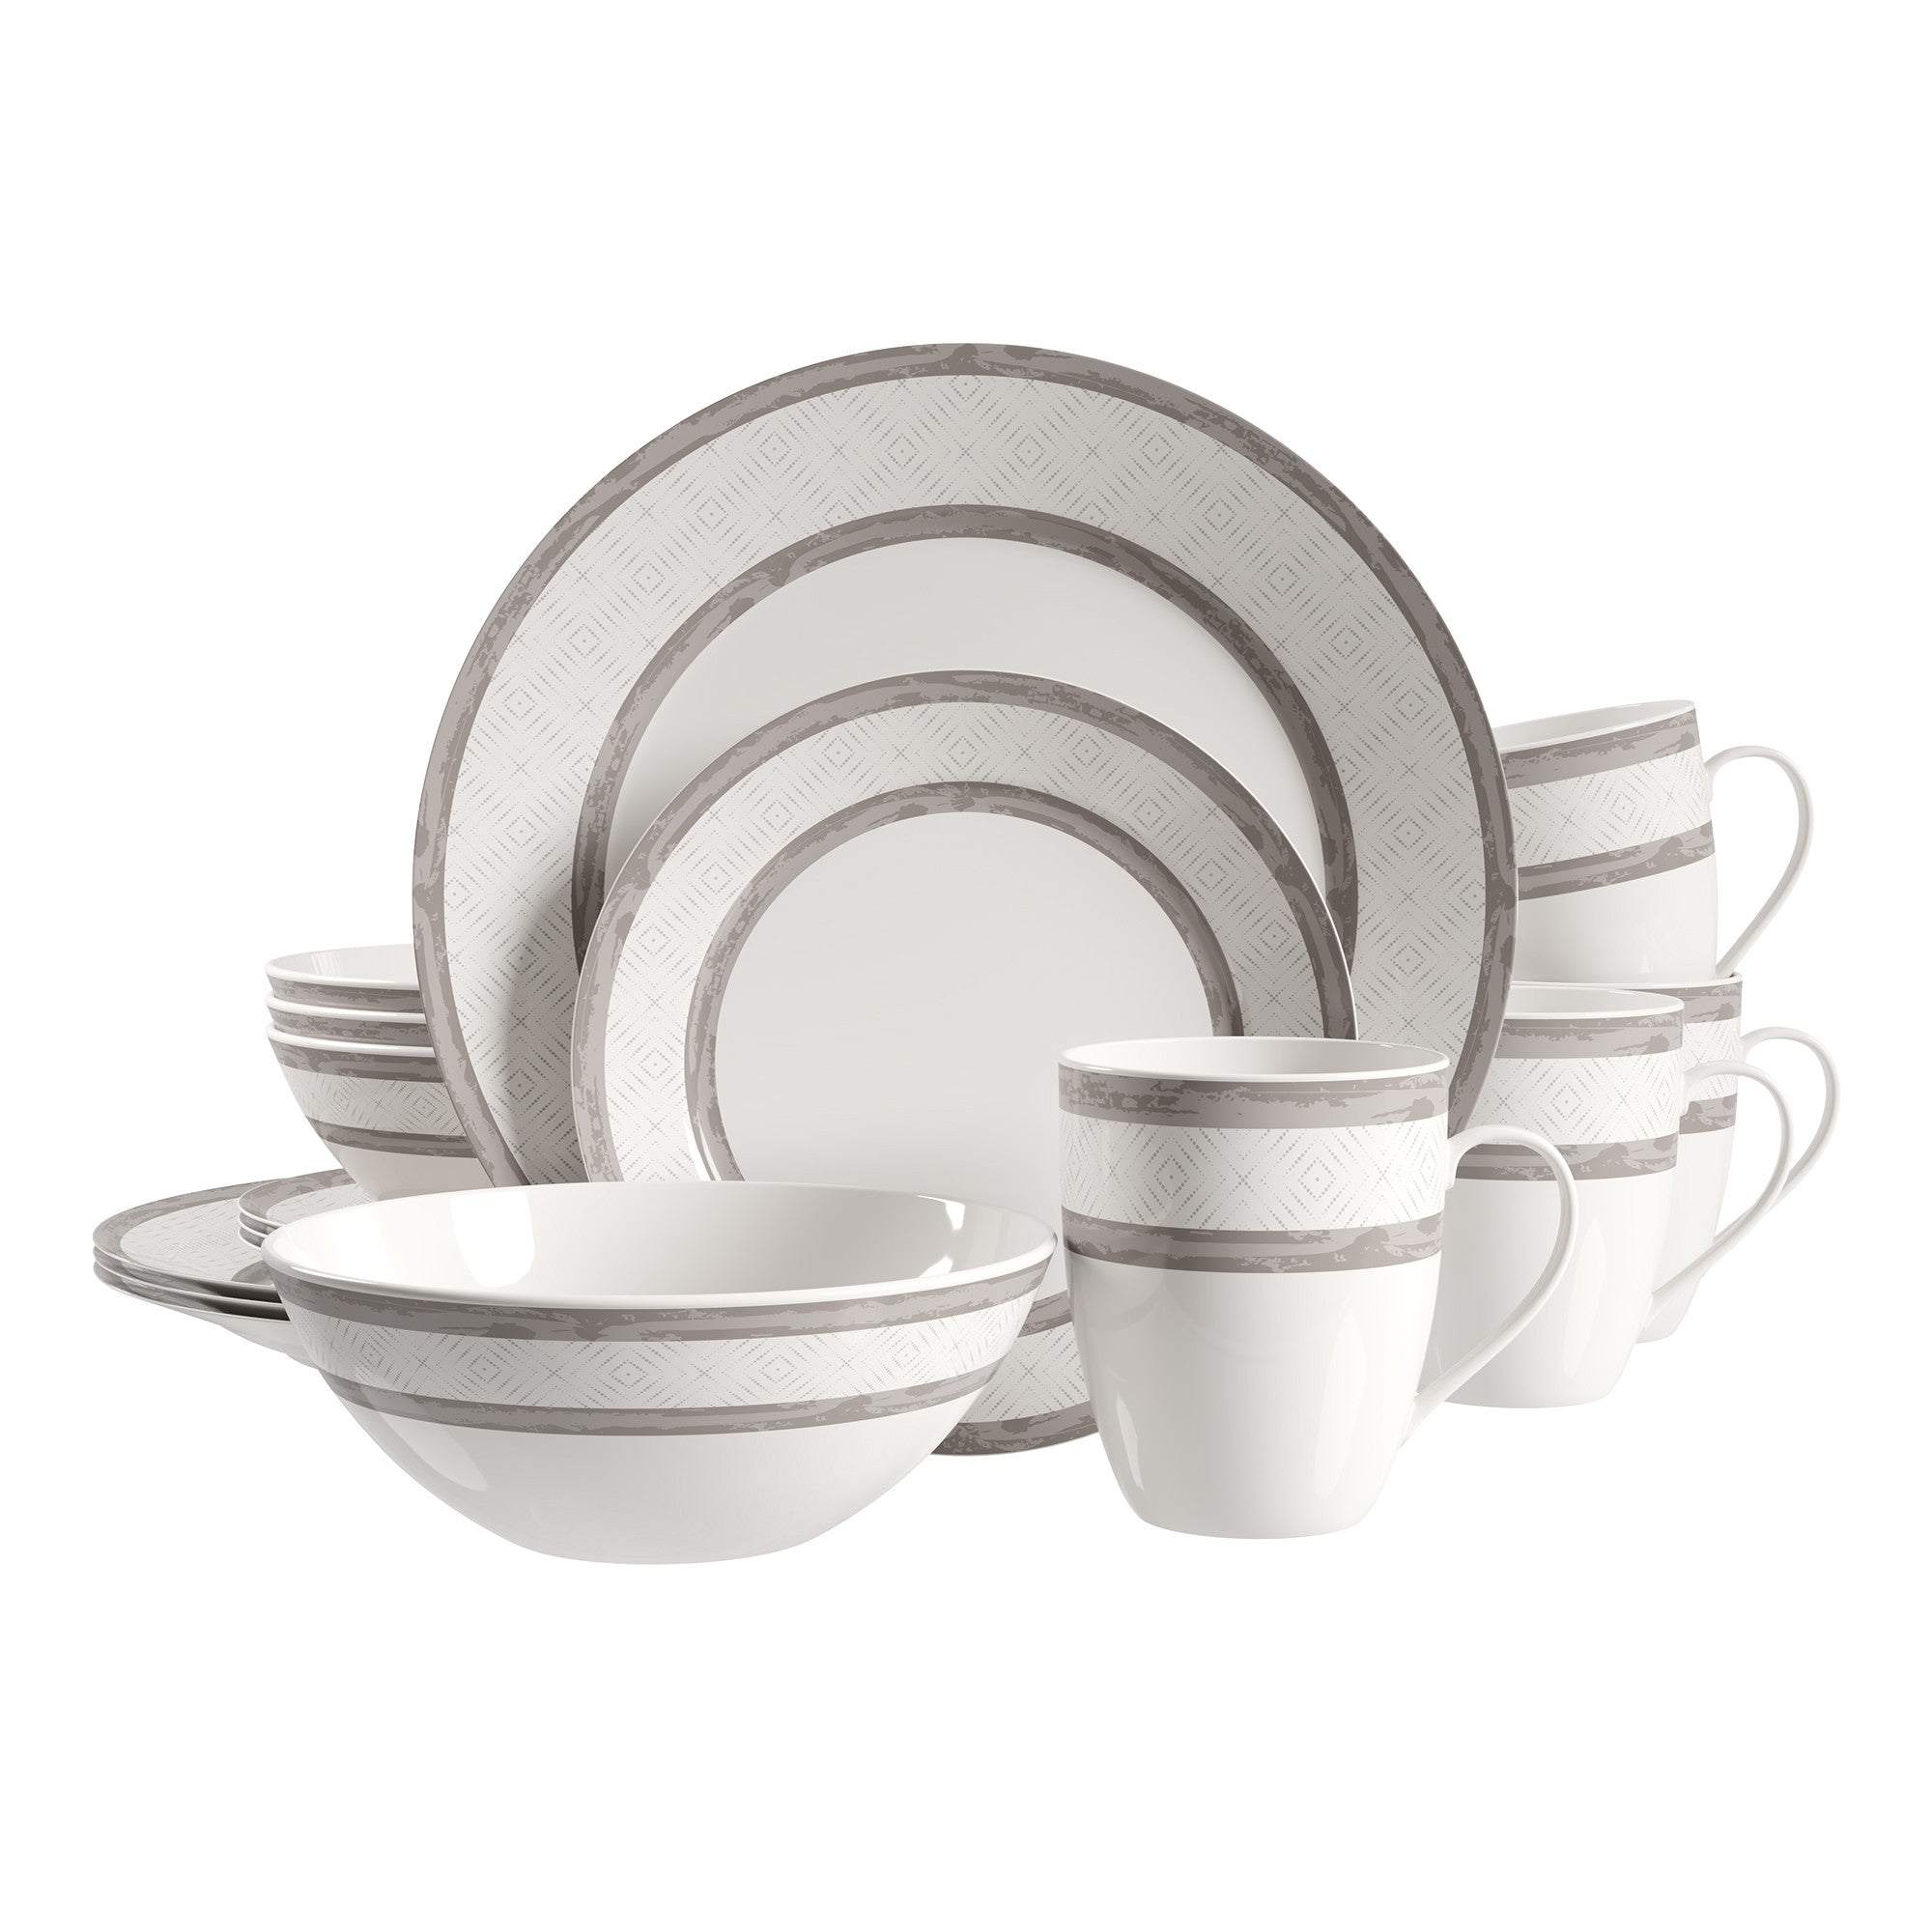 title:Safdie & Co. Luxury Premium Porcelain Dinnerset 16 Piece Set Newport;color:Multi